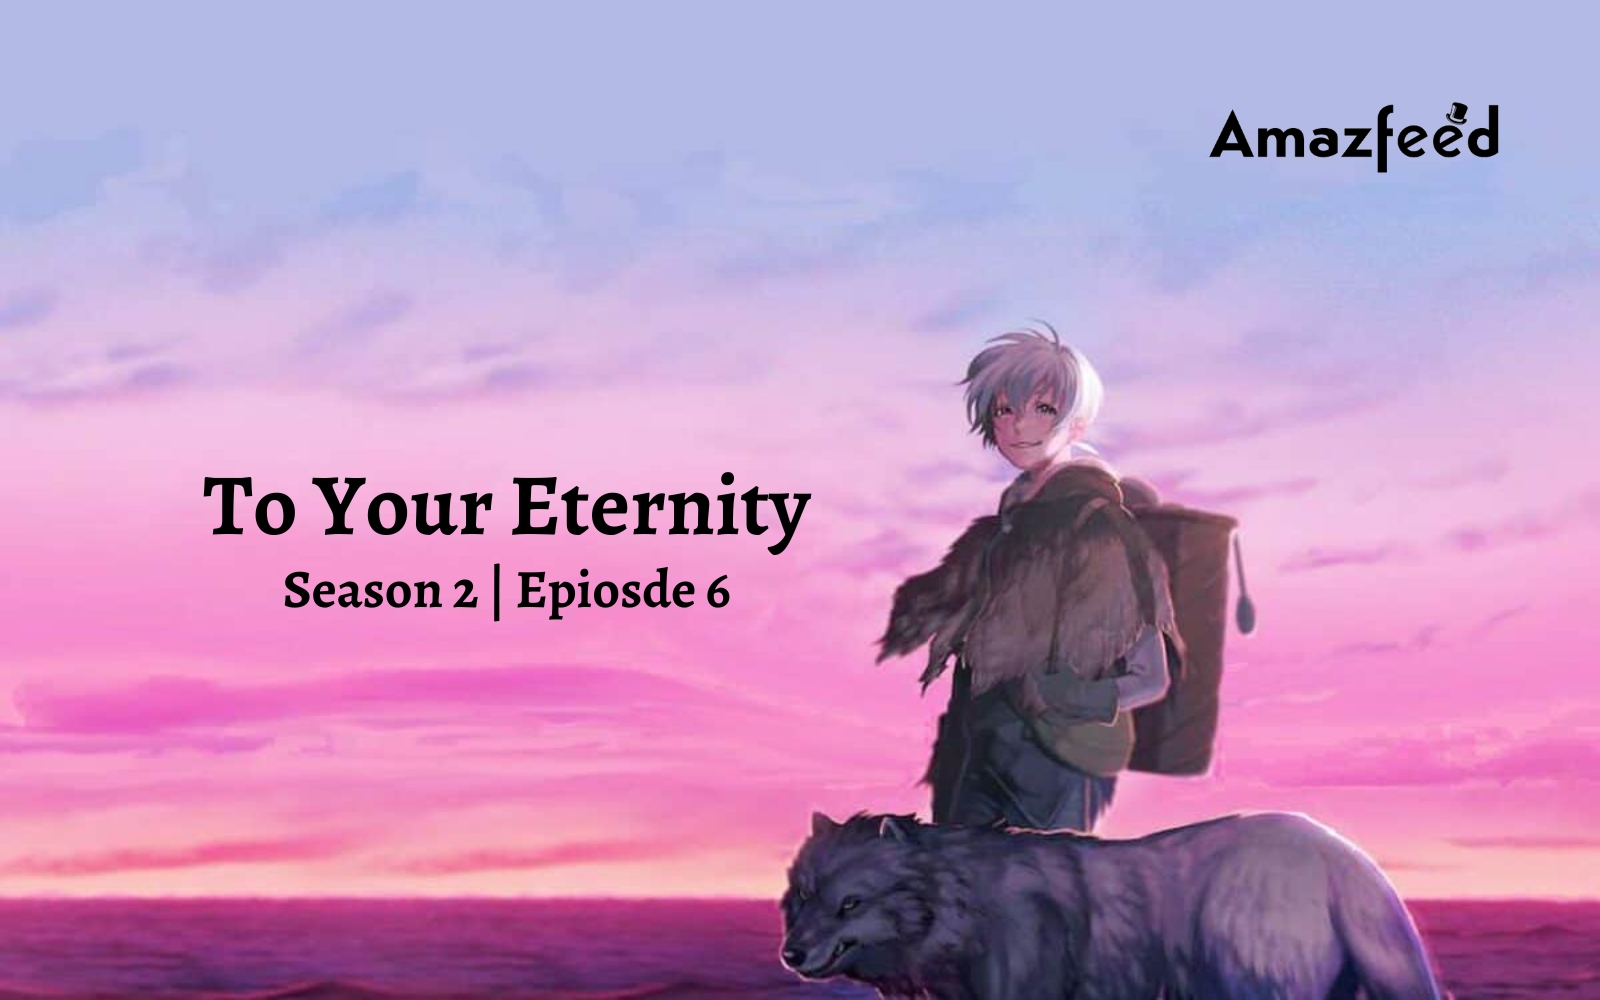 To Your Eternity Season 2 Episode 6